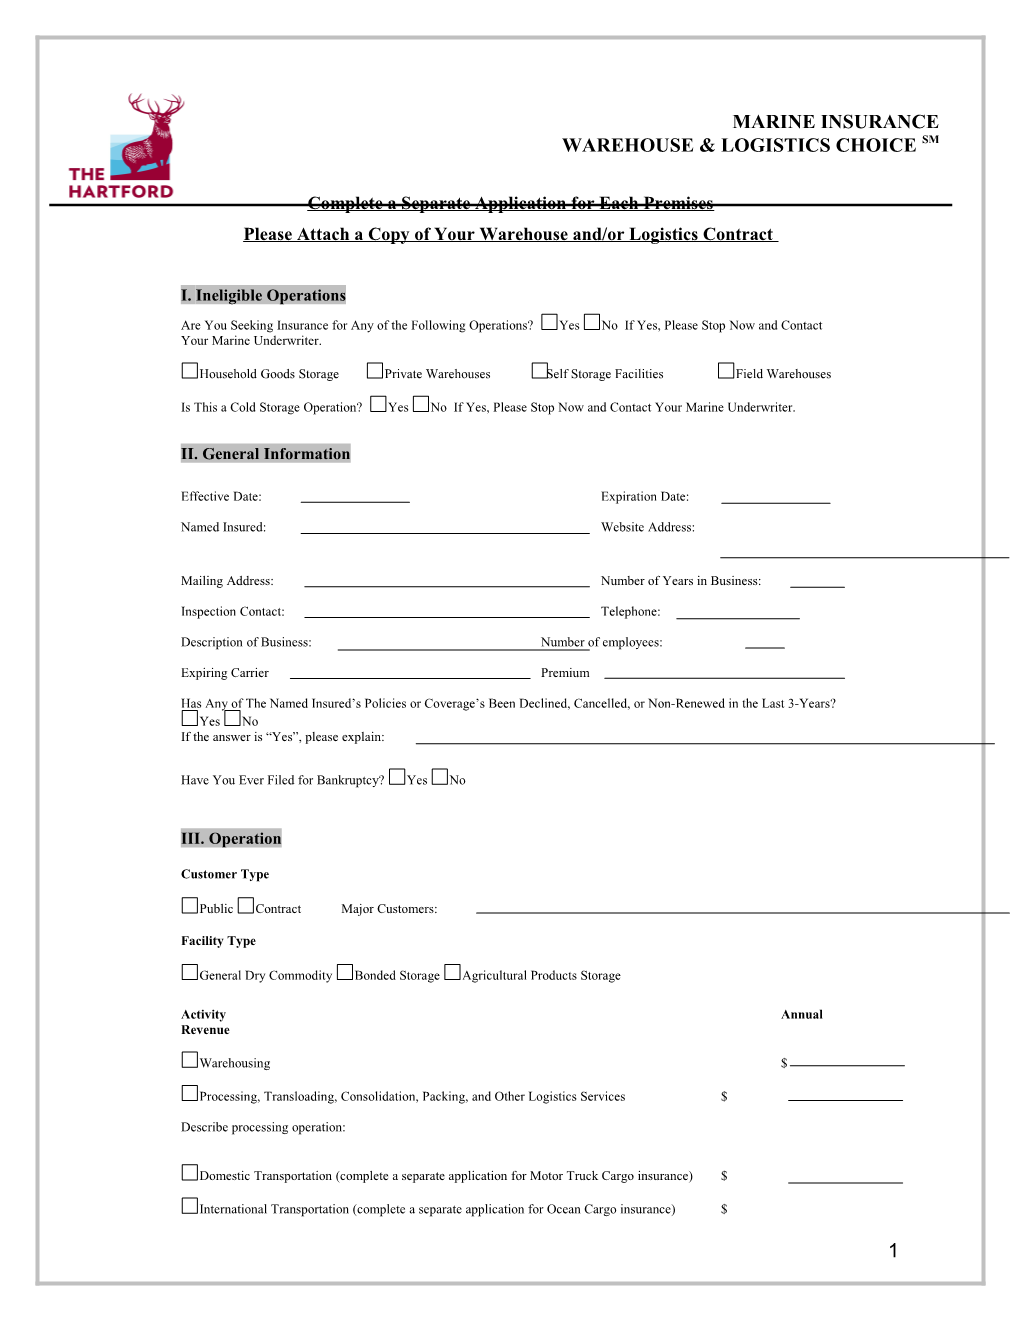 Marine Insurance Warehouse & Logistics Choice Application - the Hartford